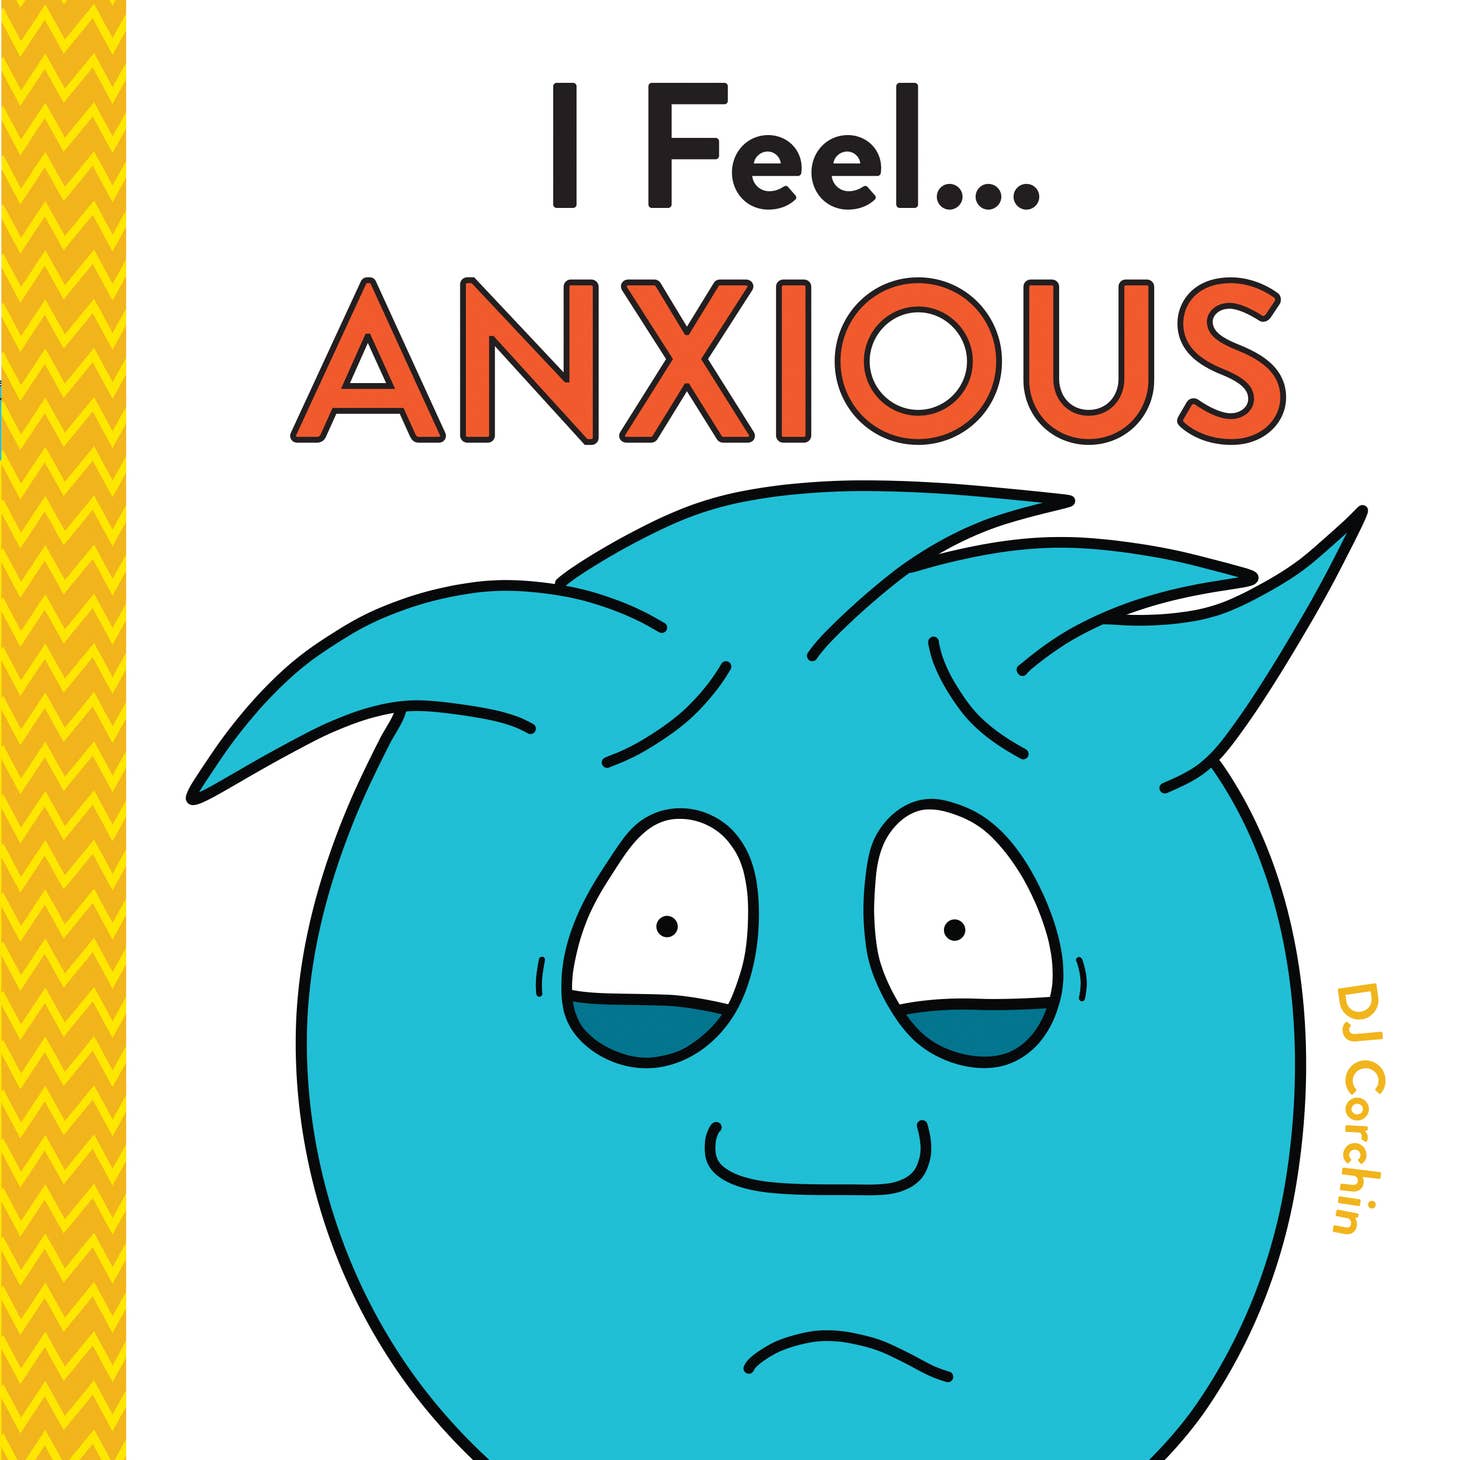 I Feel Anxious Book (Hardcover)